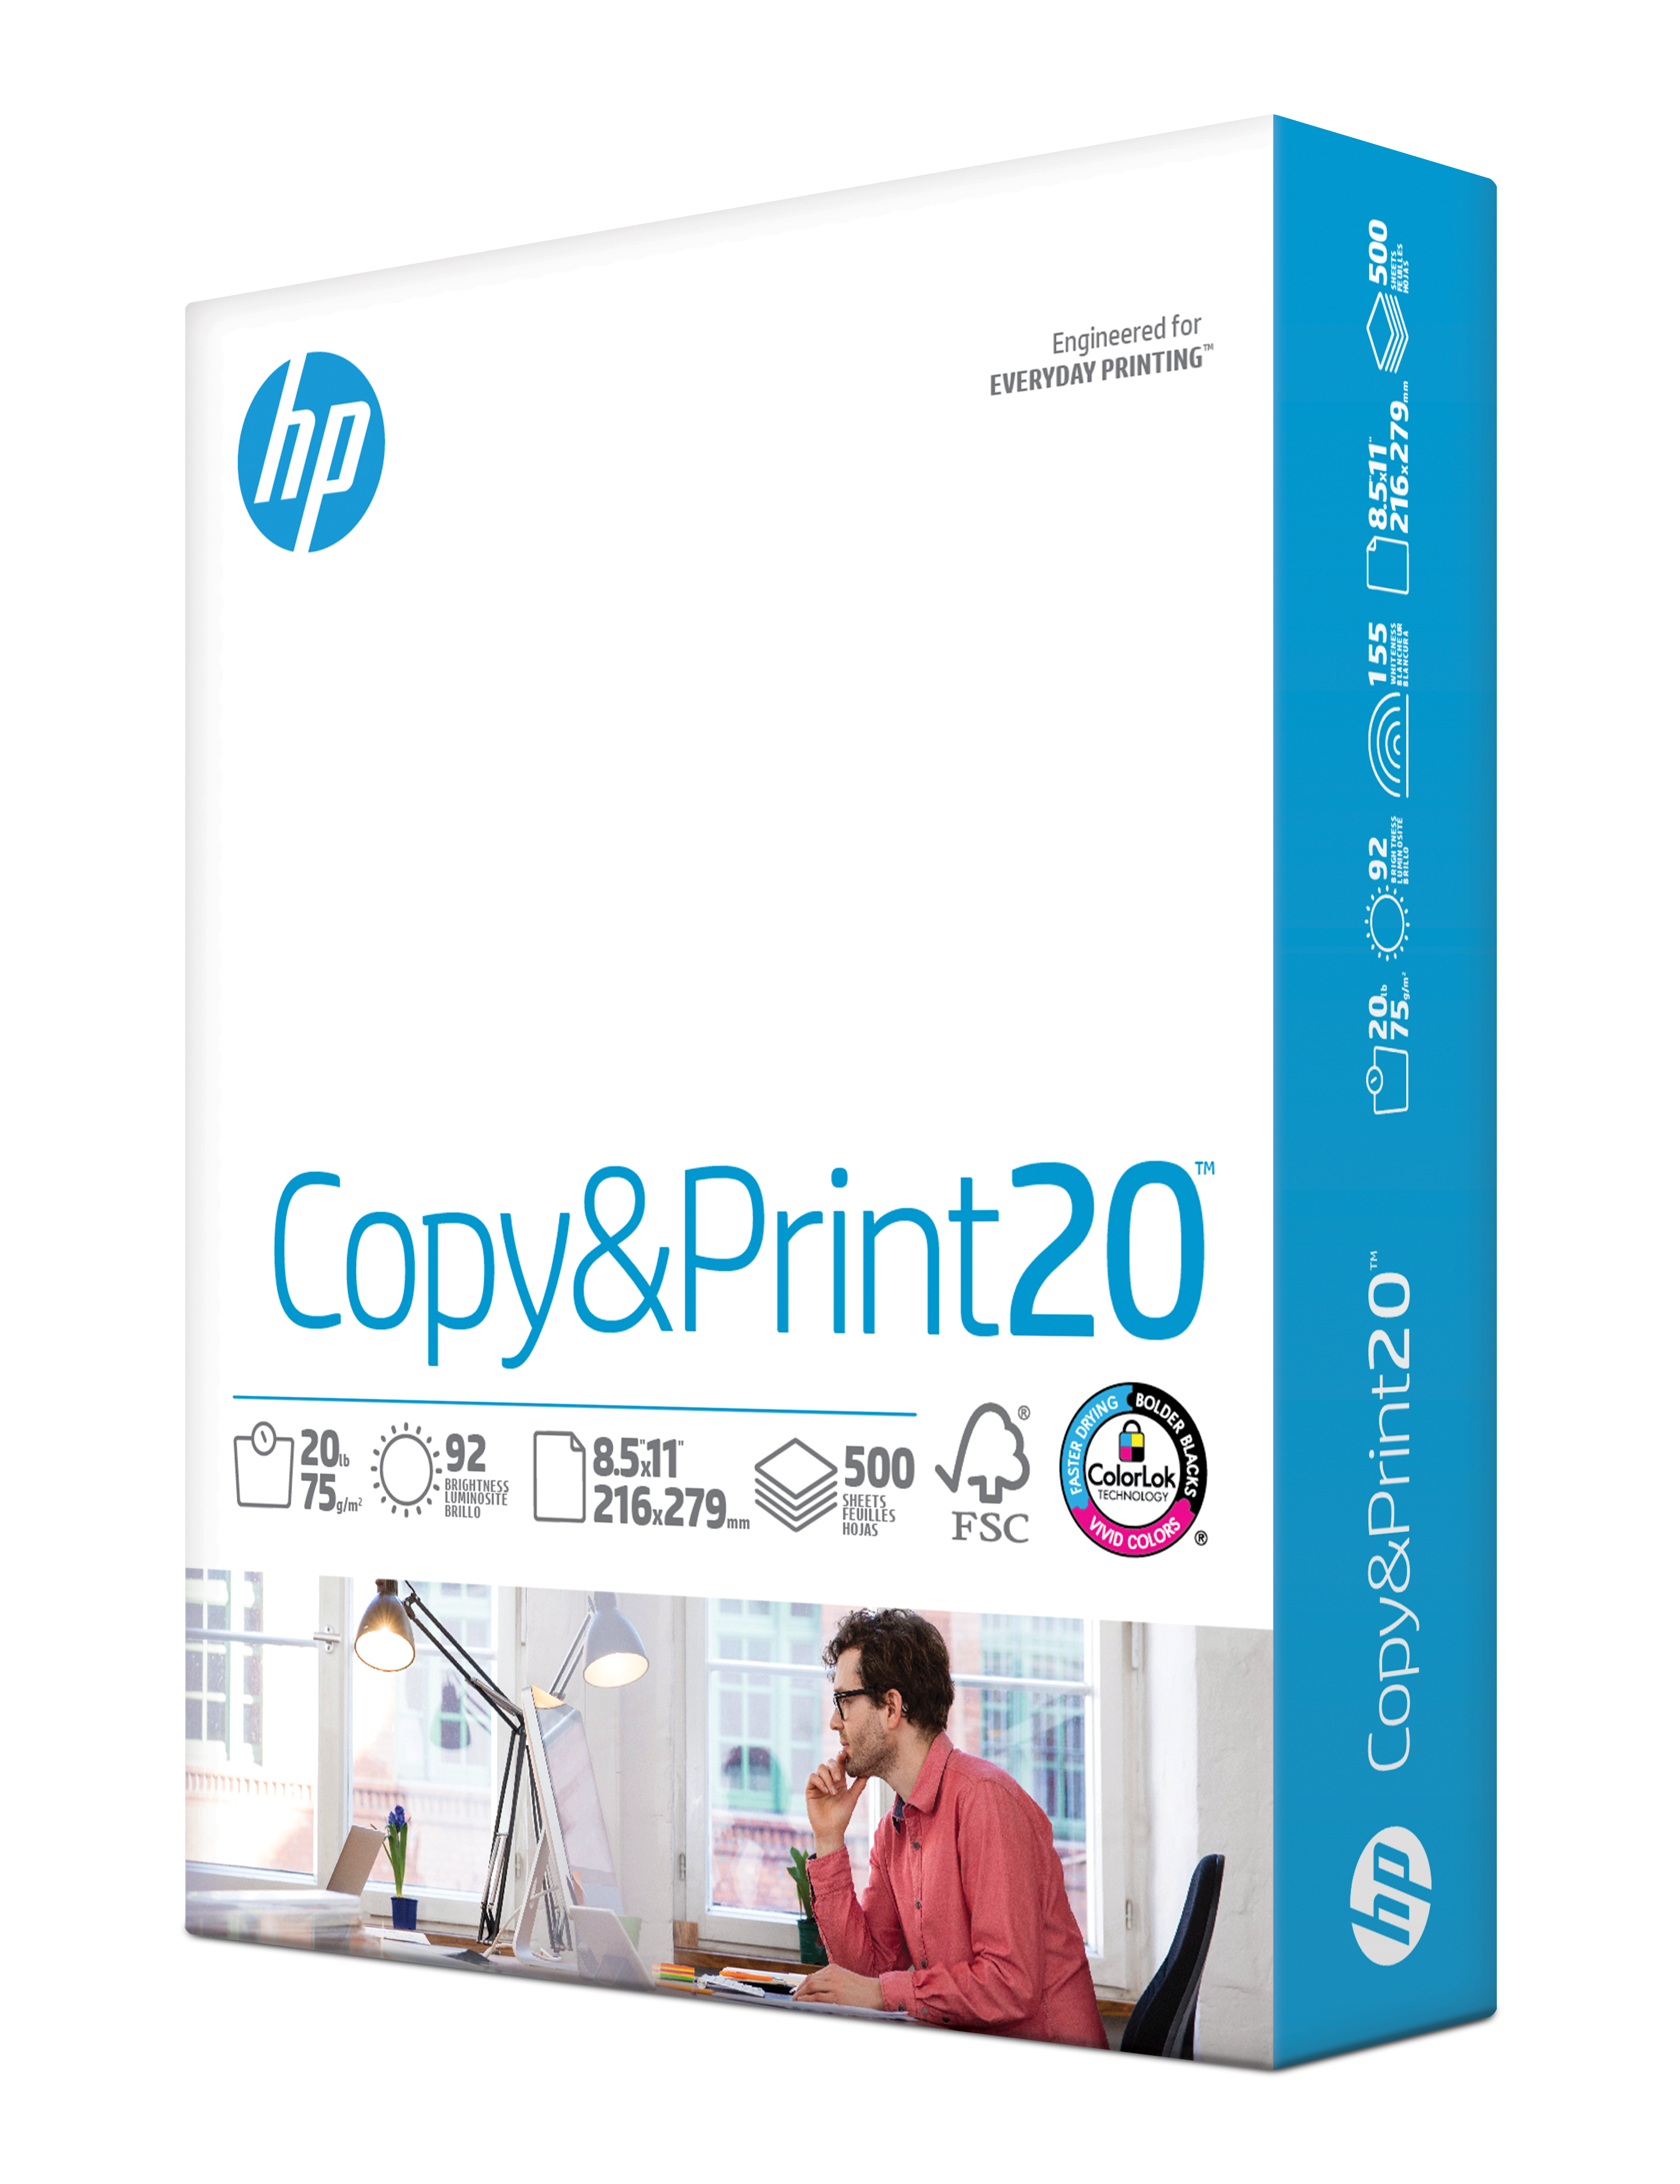 HP Copy&Print20™ - HP Papers